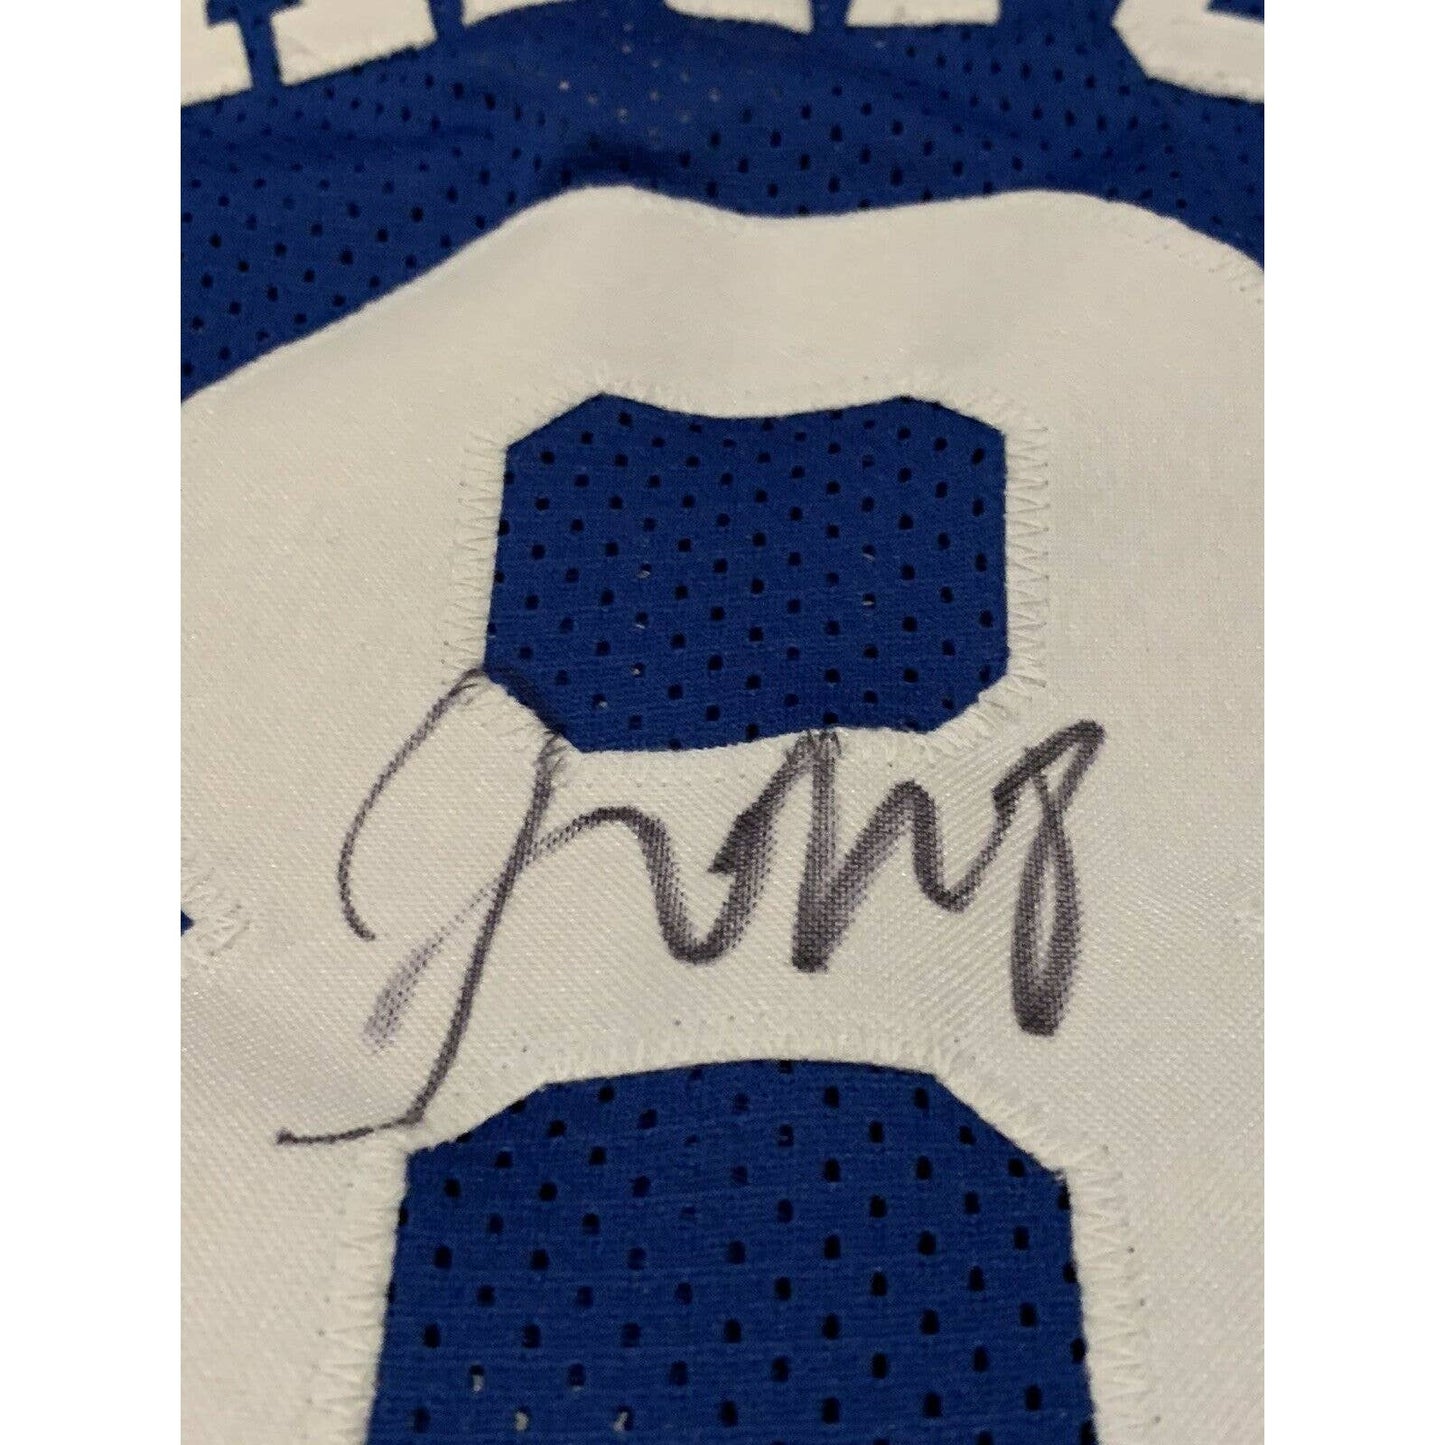 Jahlil Okafor Autographed/Signed Jersey TRISTAR Philadelphia 76ers - TreasuresEvolved